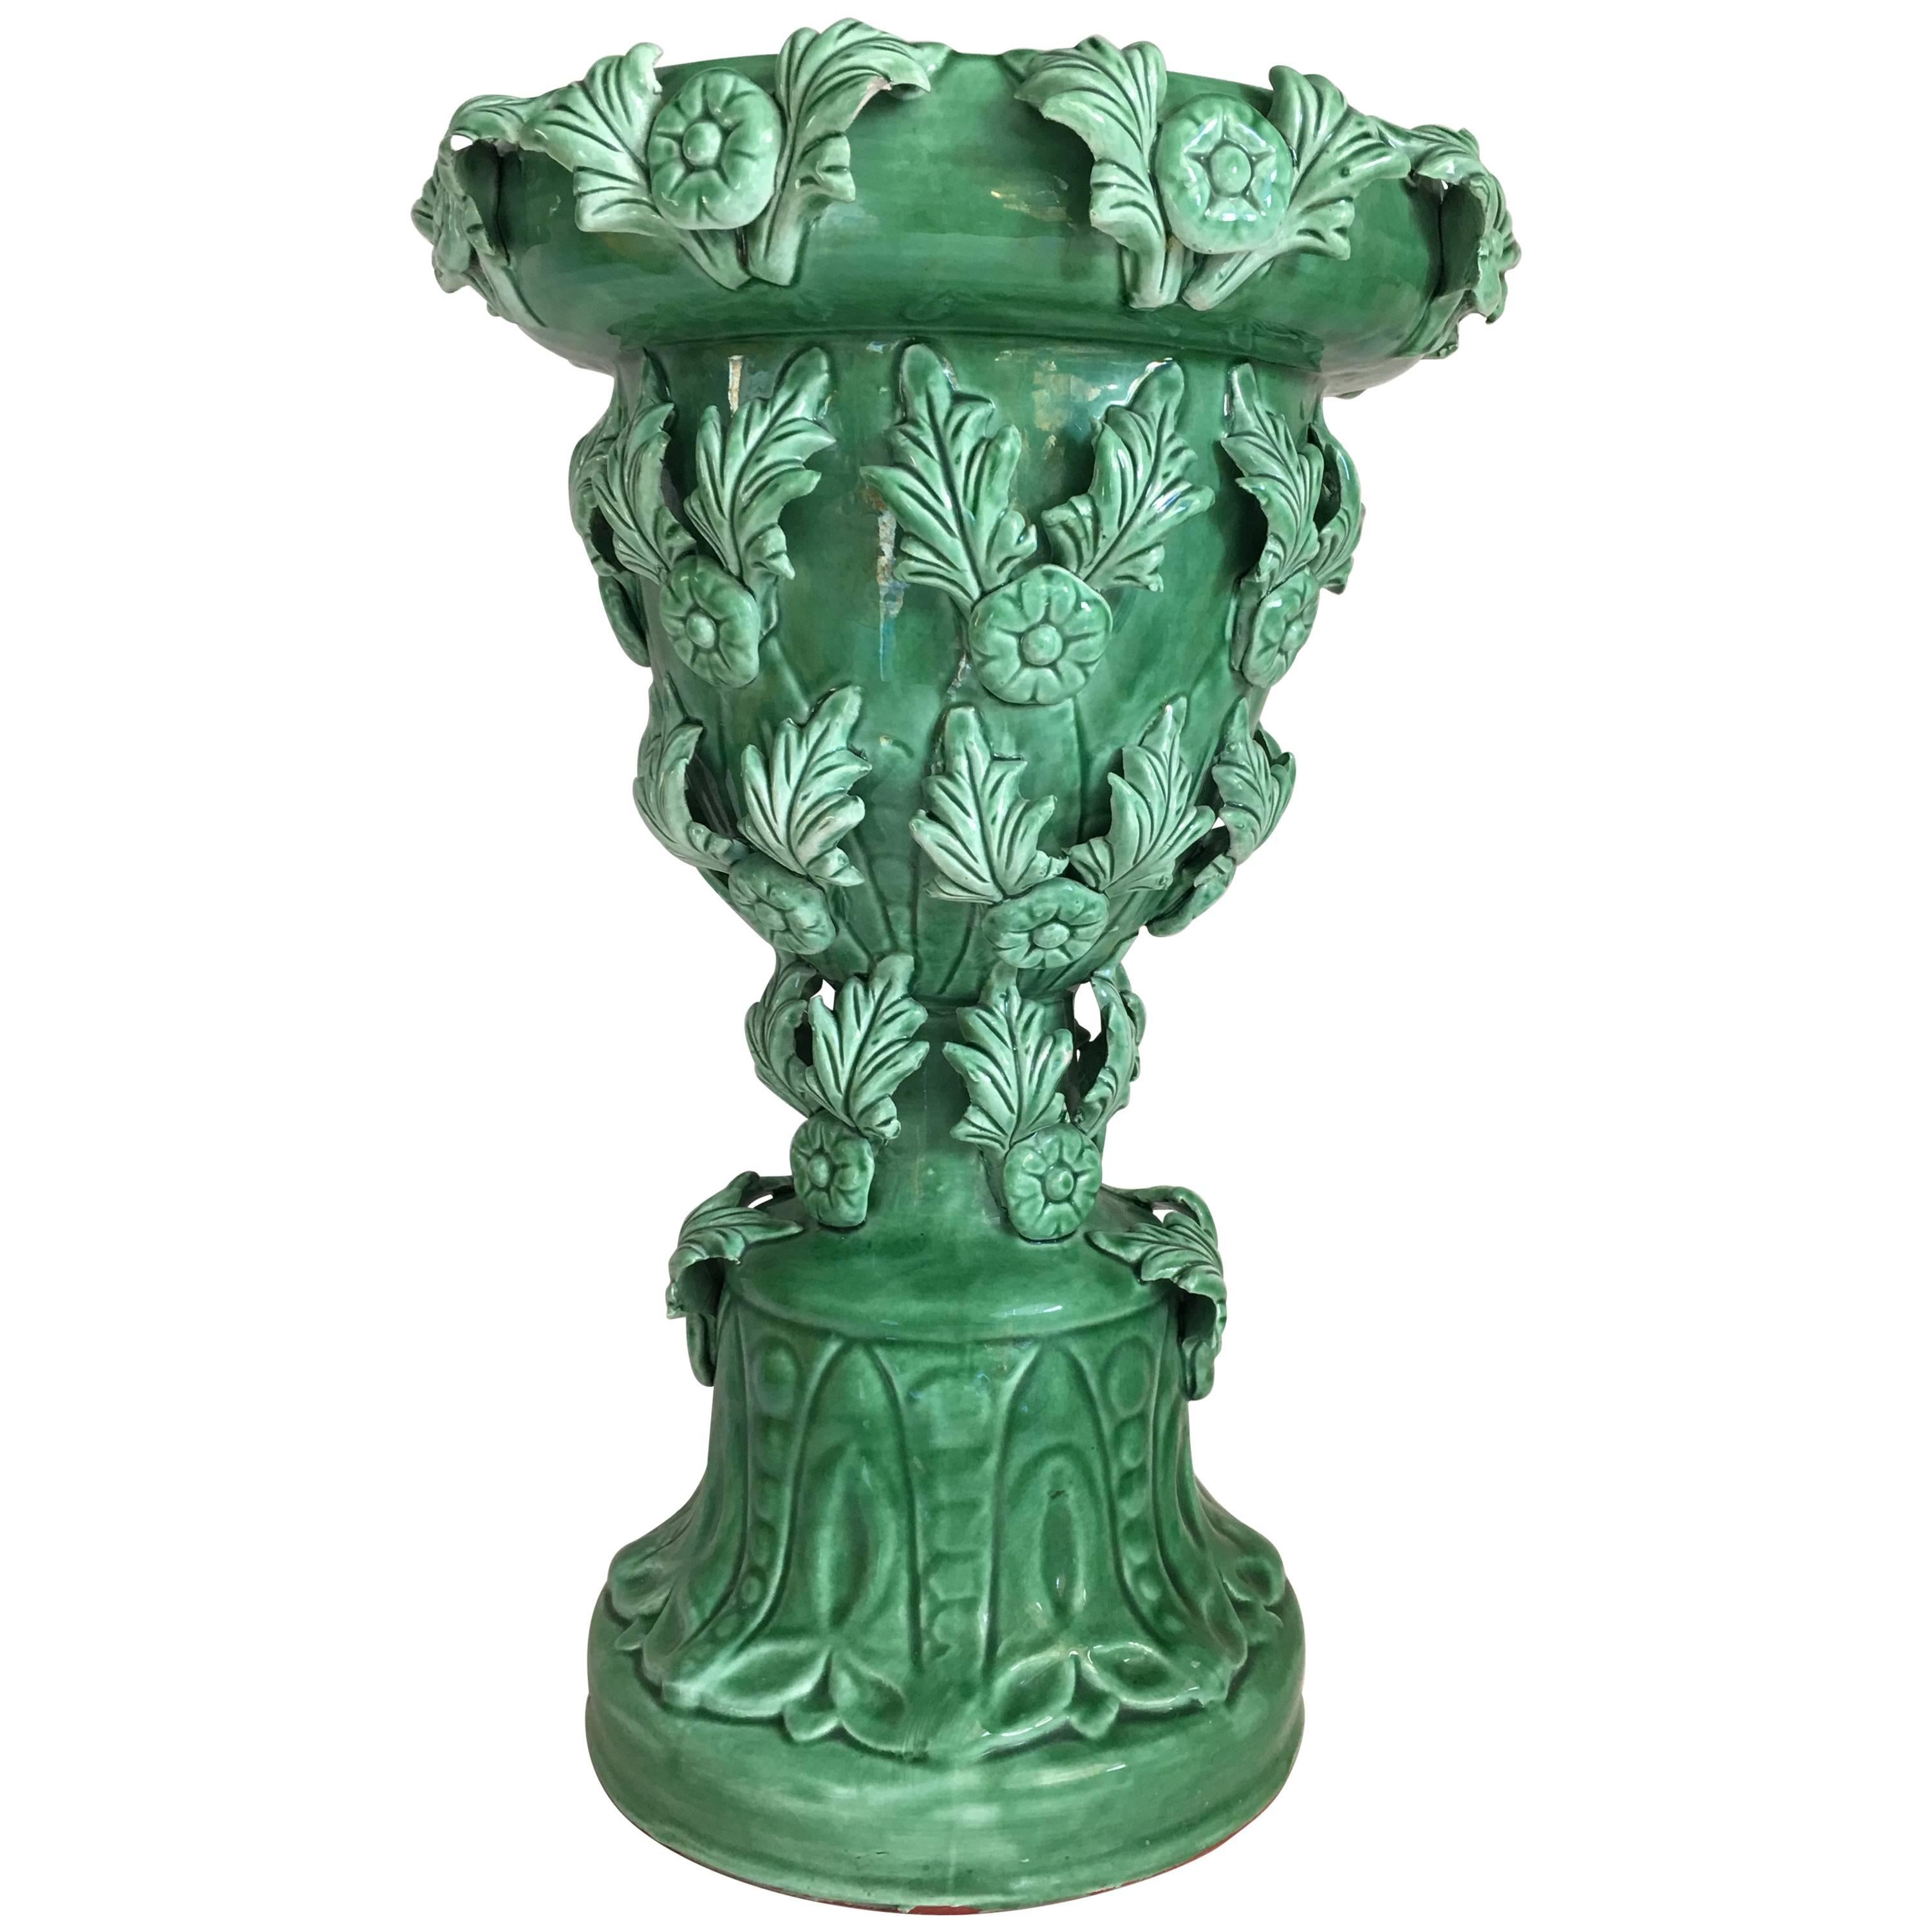 French Art Nouveau Ceramic Planter or Vase circa 1910 For Sale